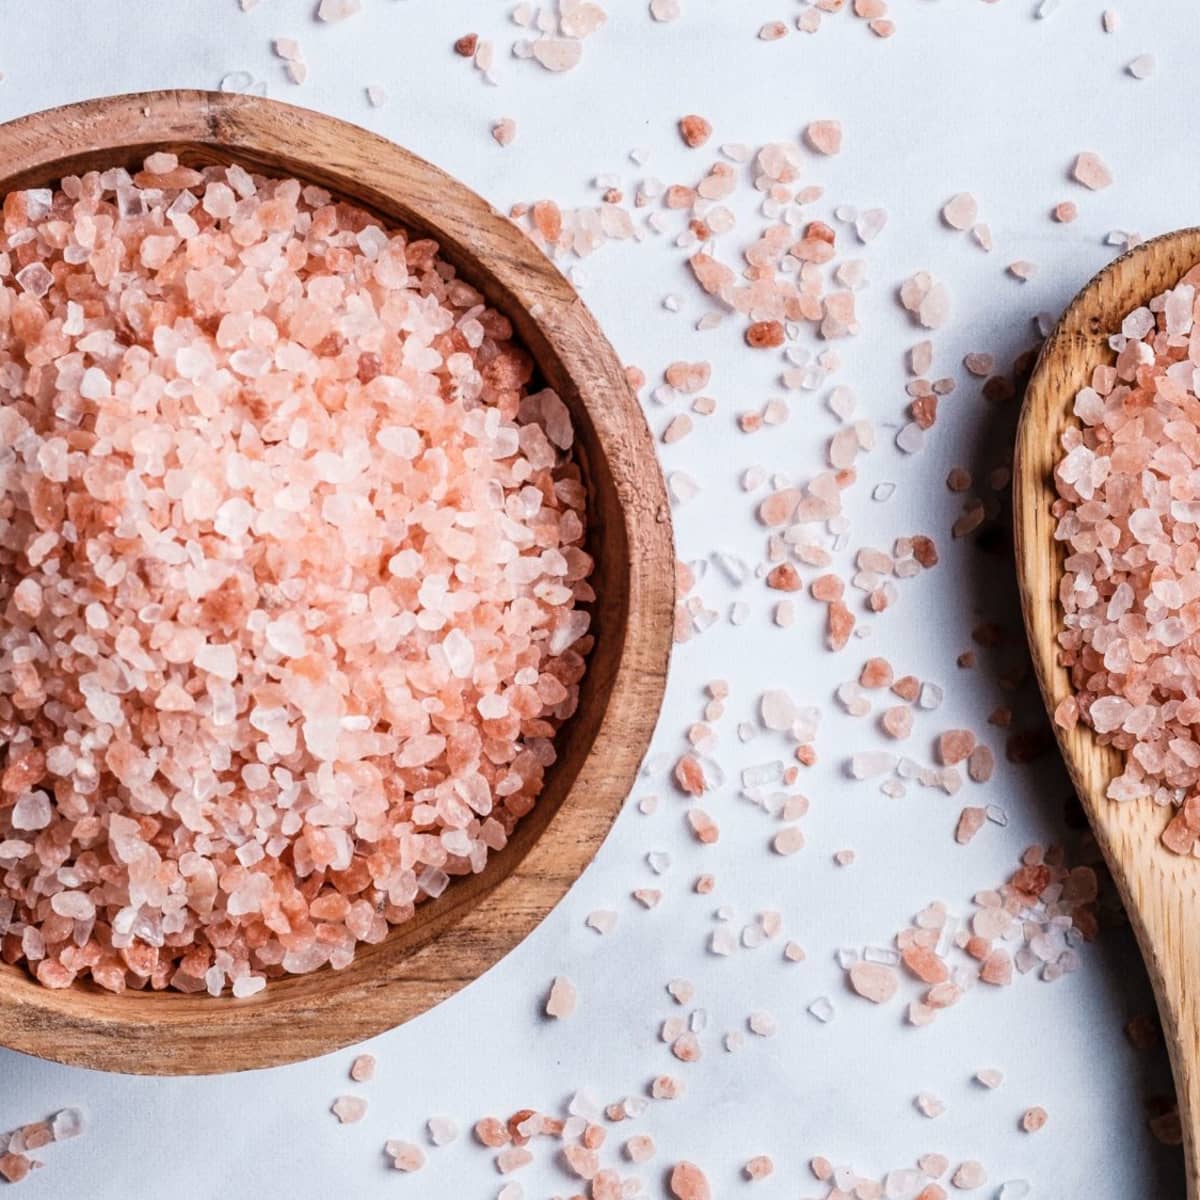 Himalayan Salt Benefits: Why It's a Better Choice Than Table Salt